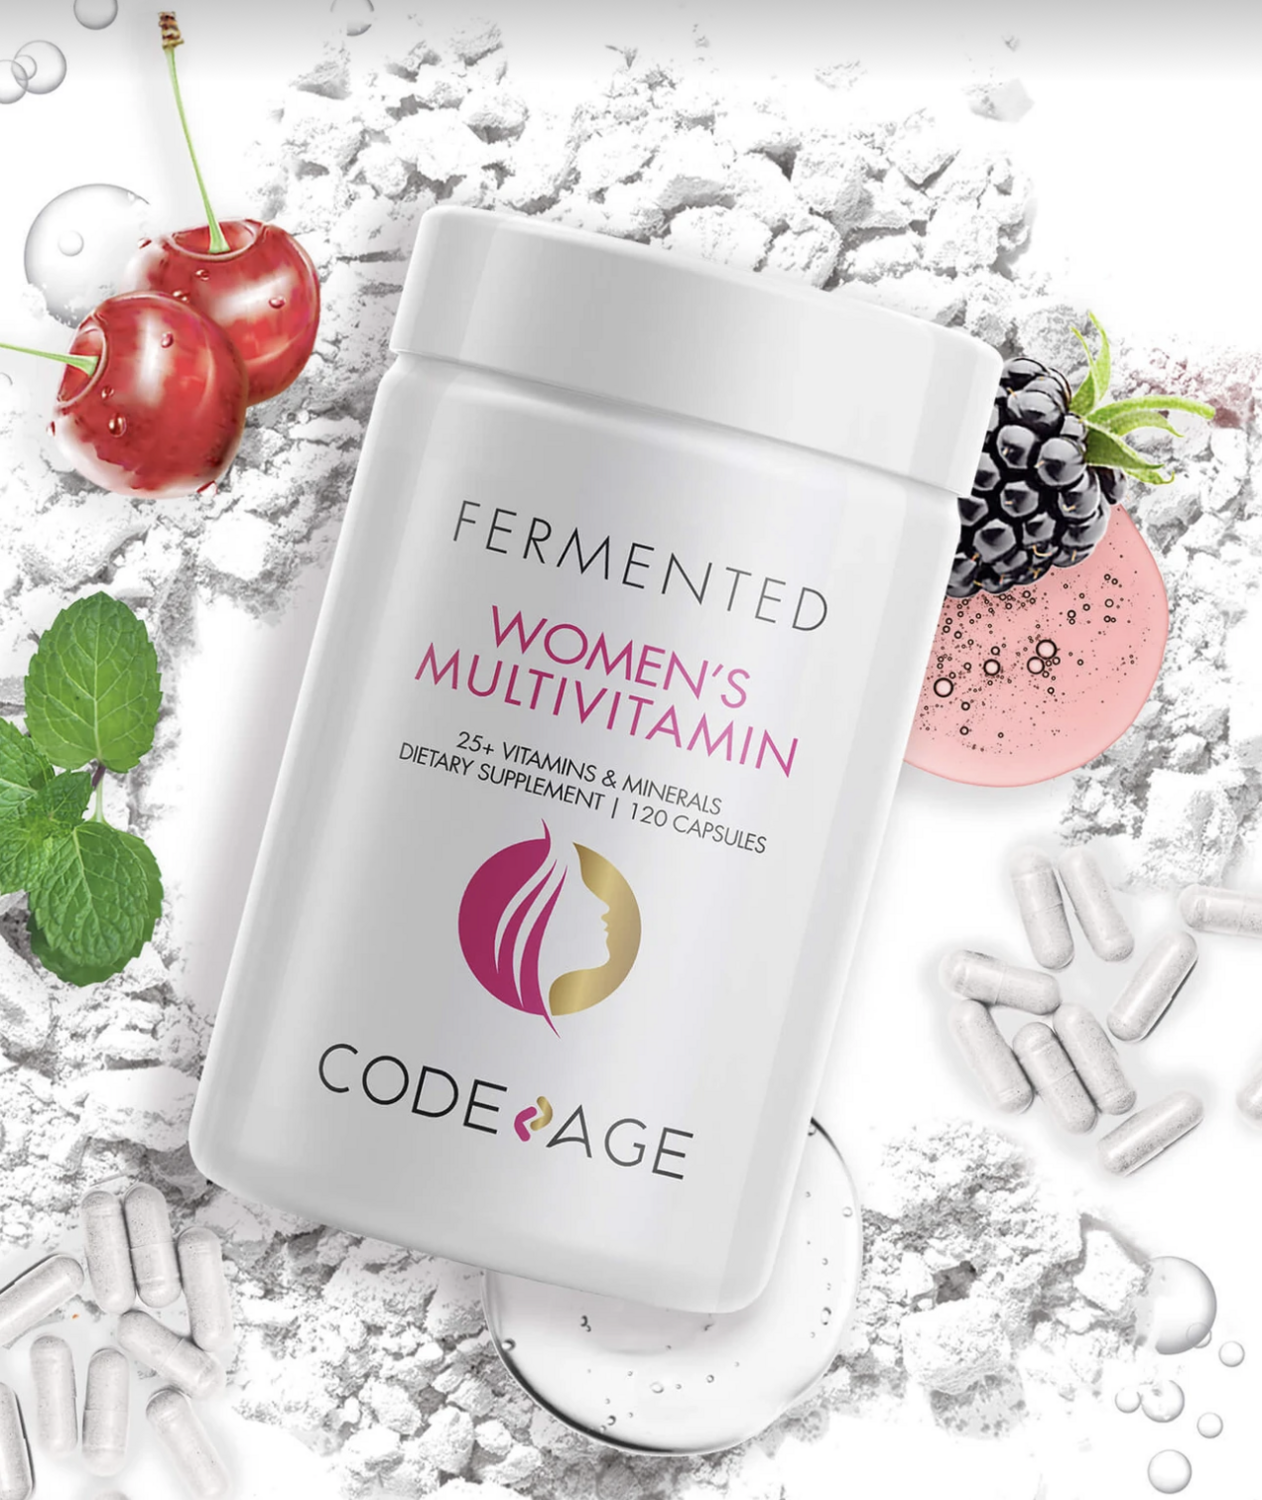 Women's Fermented Multivitamin 120 capsules CodeAge